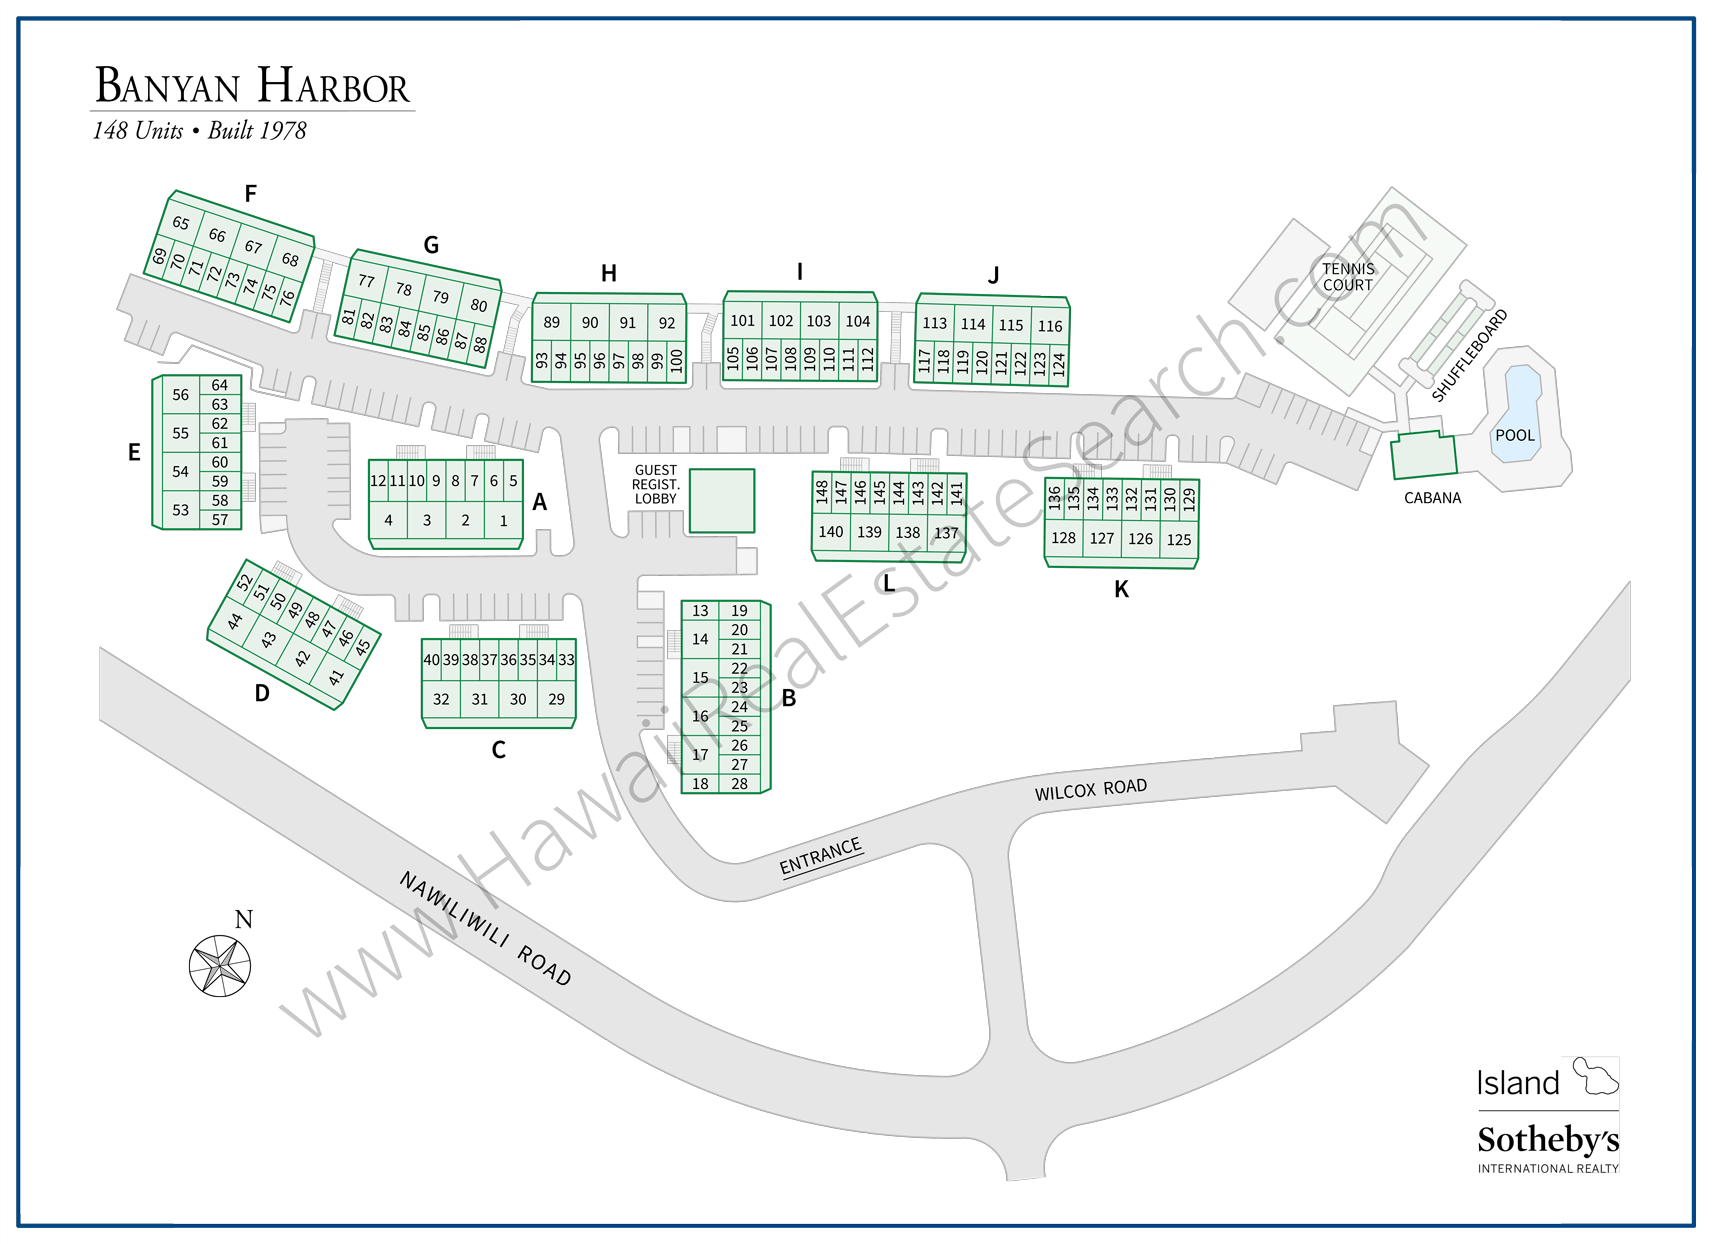 Banyan Harbor Map